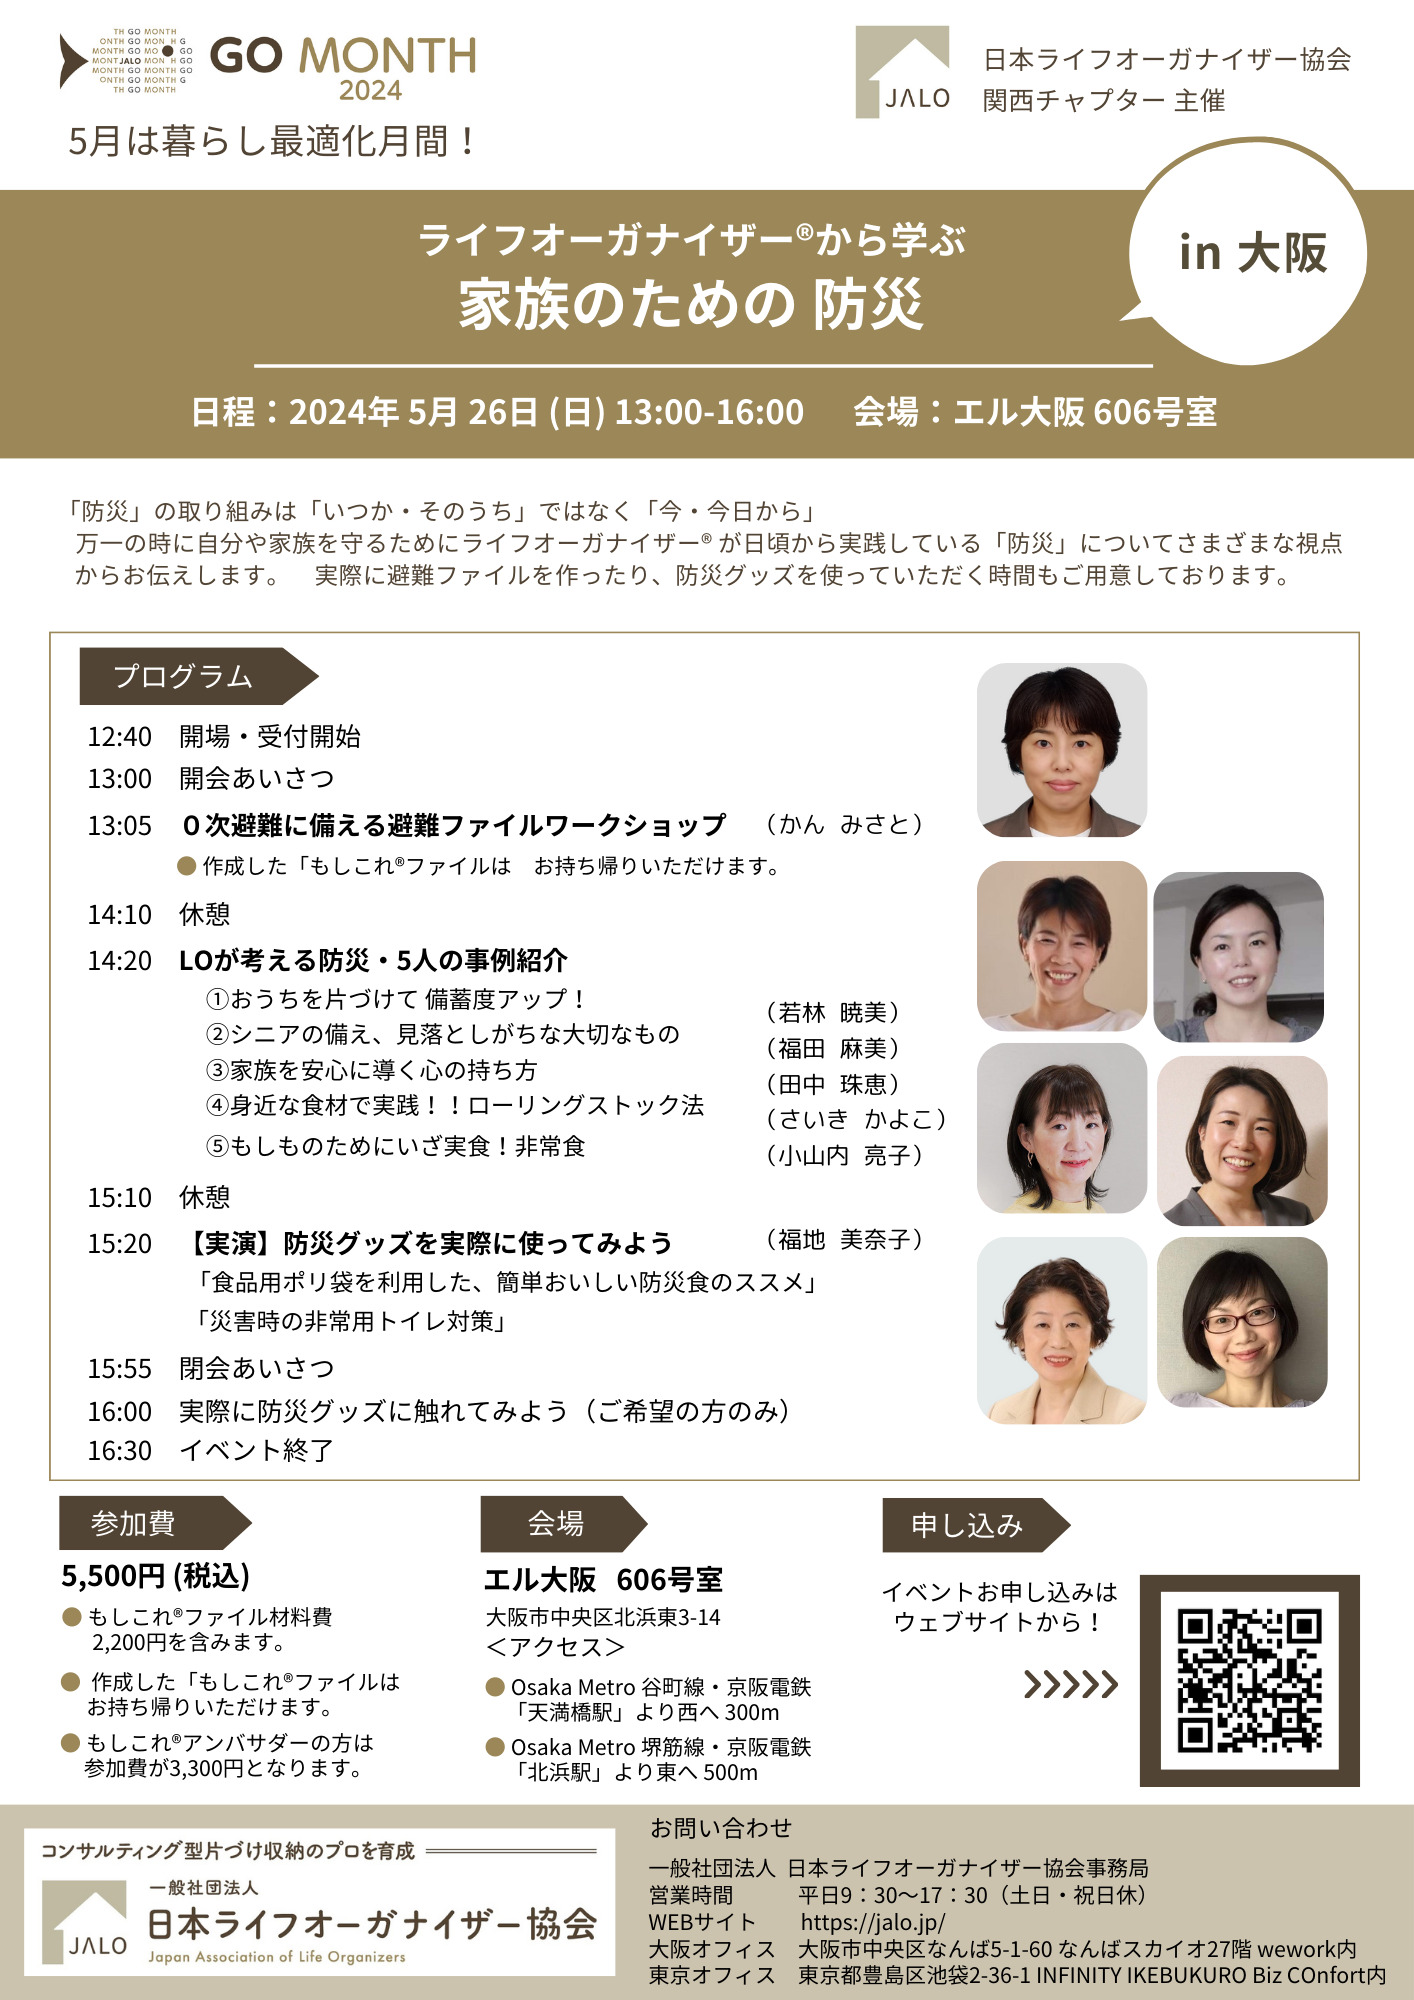 GO MONTH2024関西チャプター主催イベント in大阪